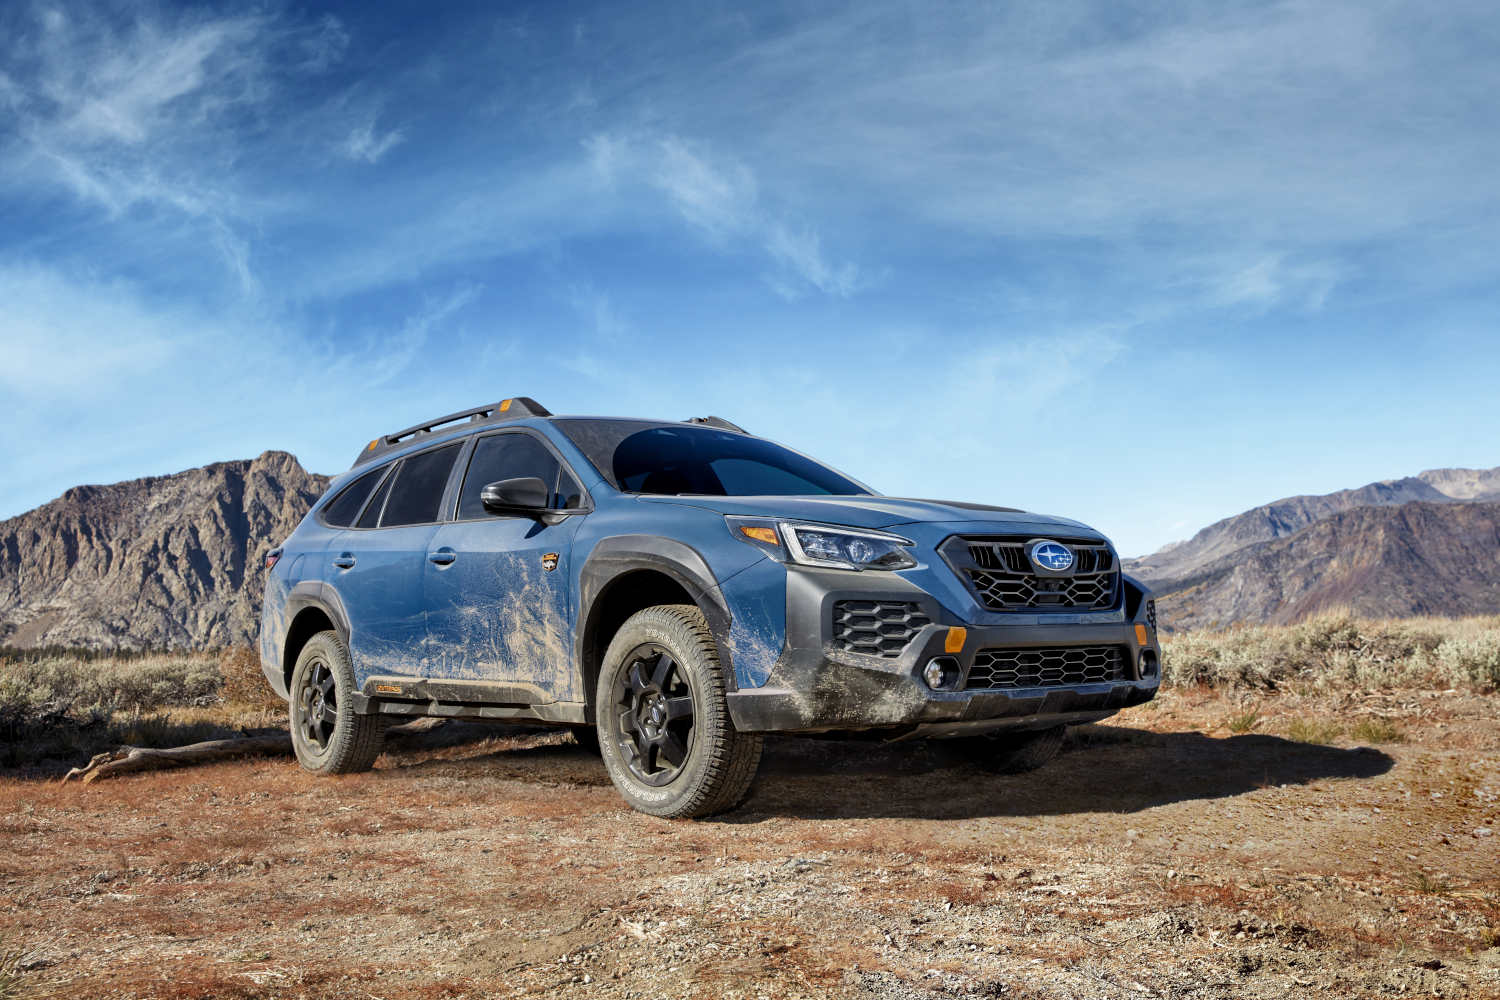 A Subaru Outback in the dirt